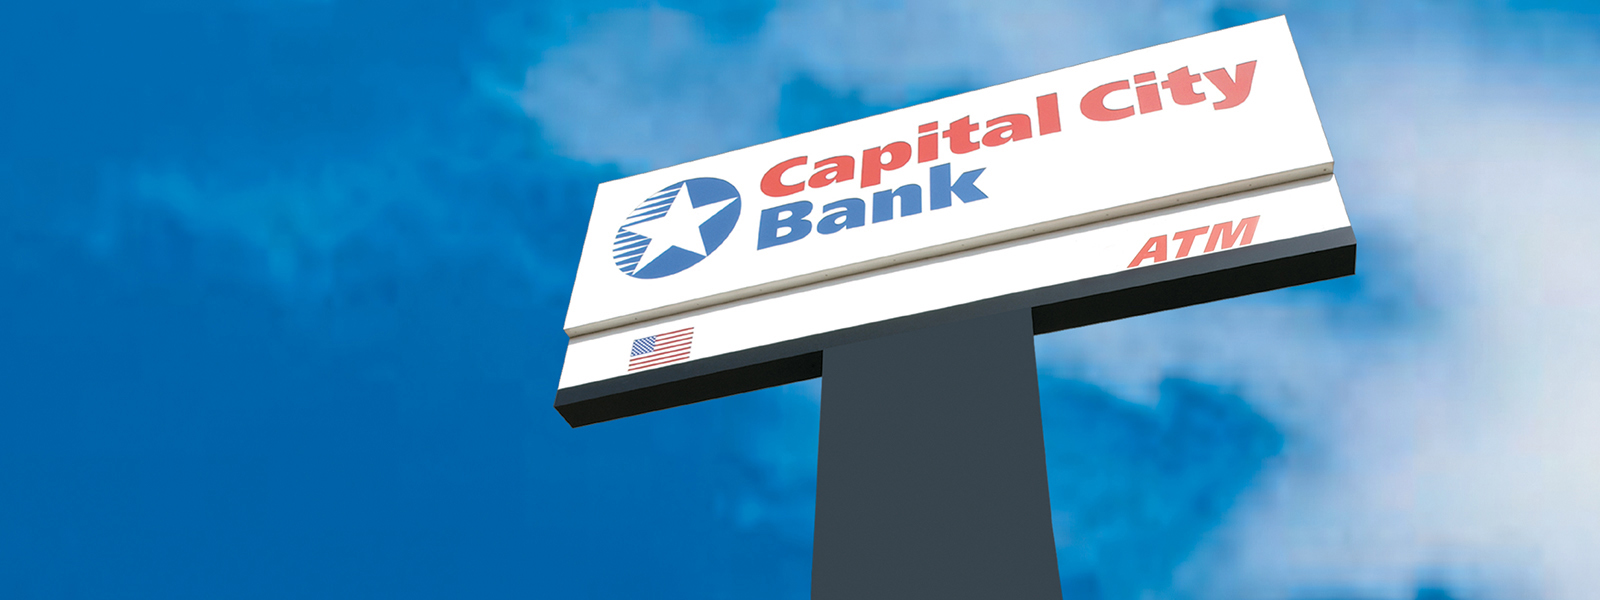 capital city bank